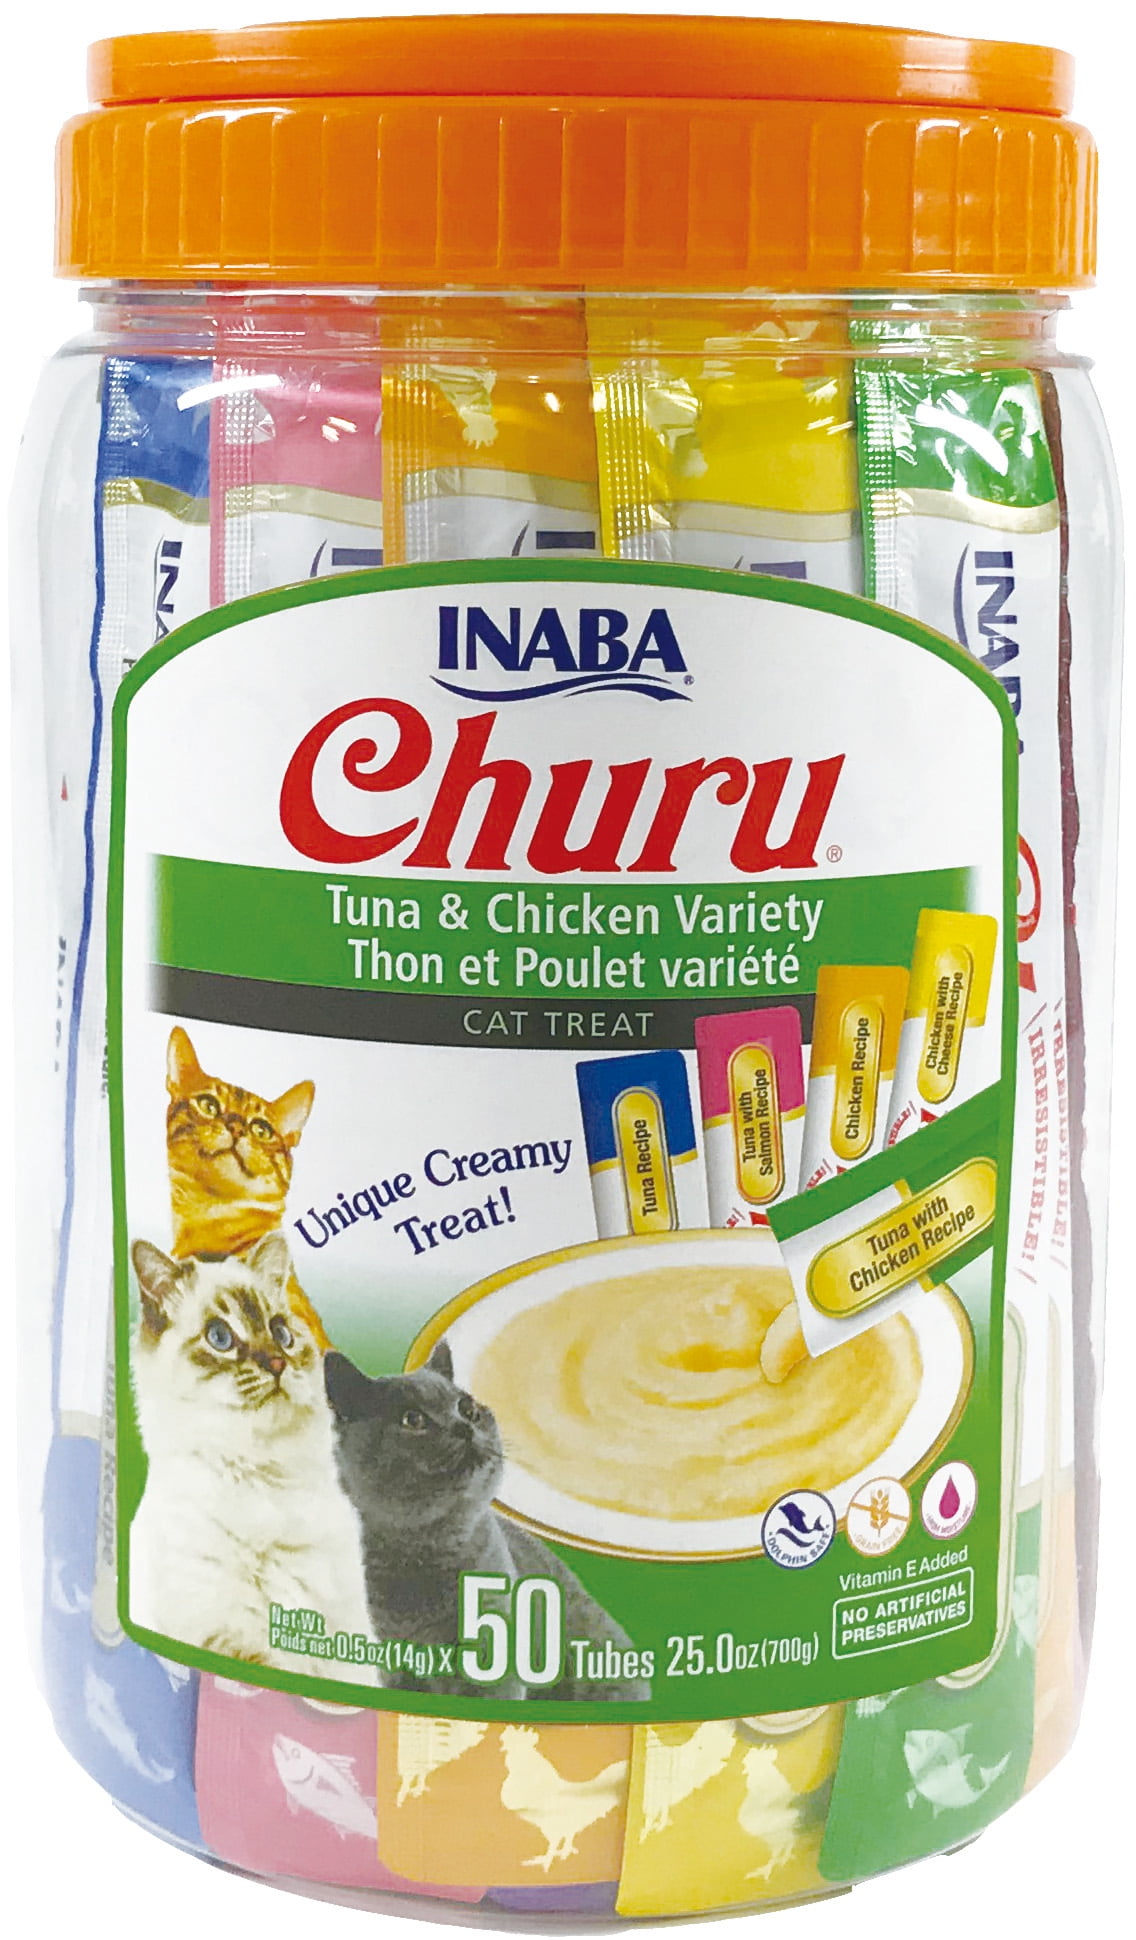 Ib00769 Churu Tuna & Chicken 50 Tubes Cannister Treat